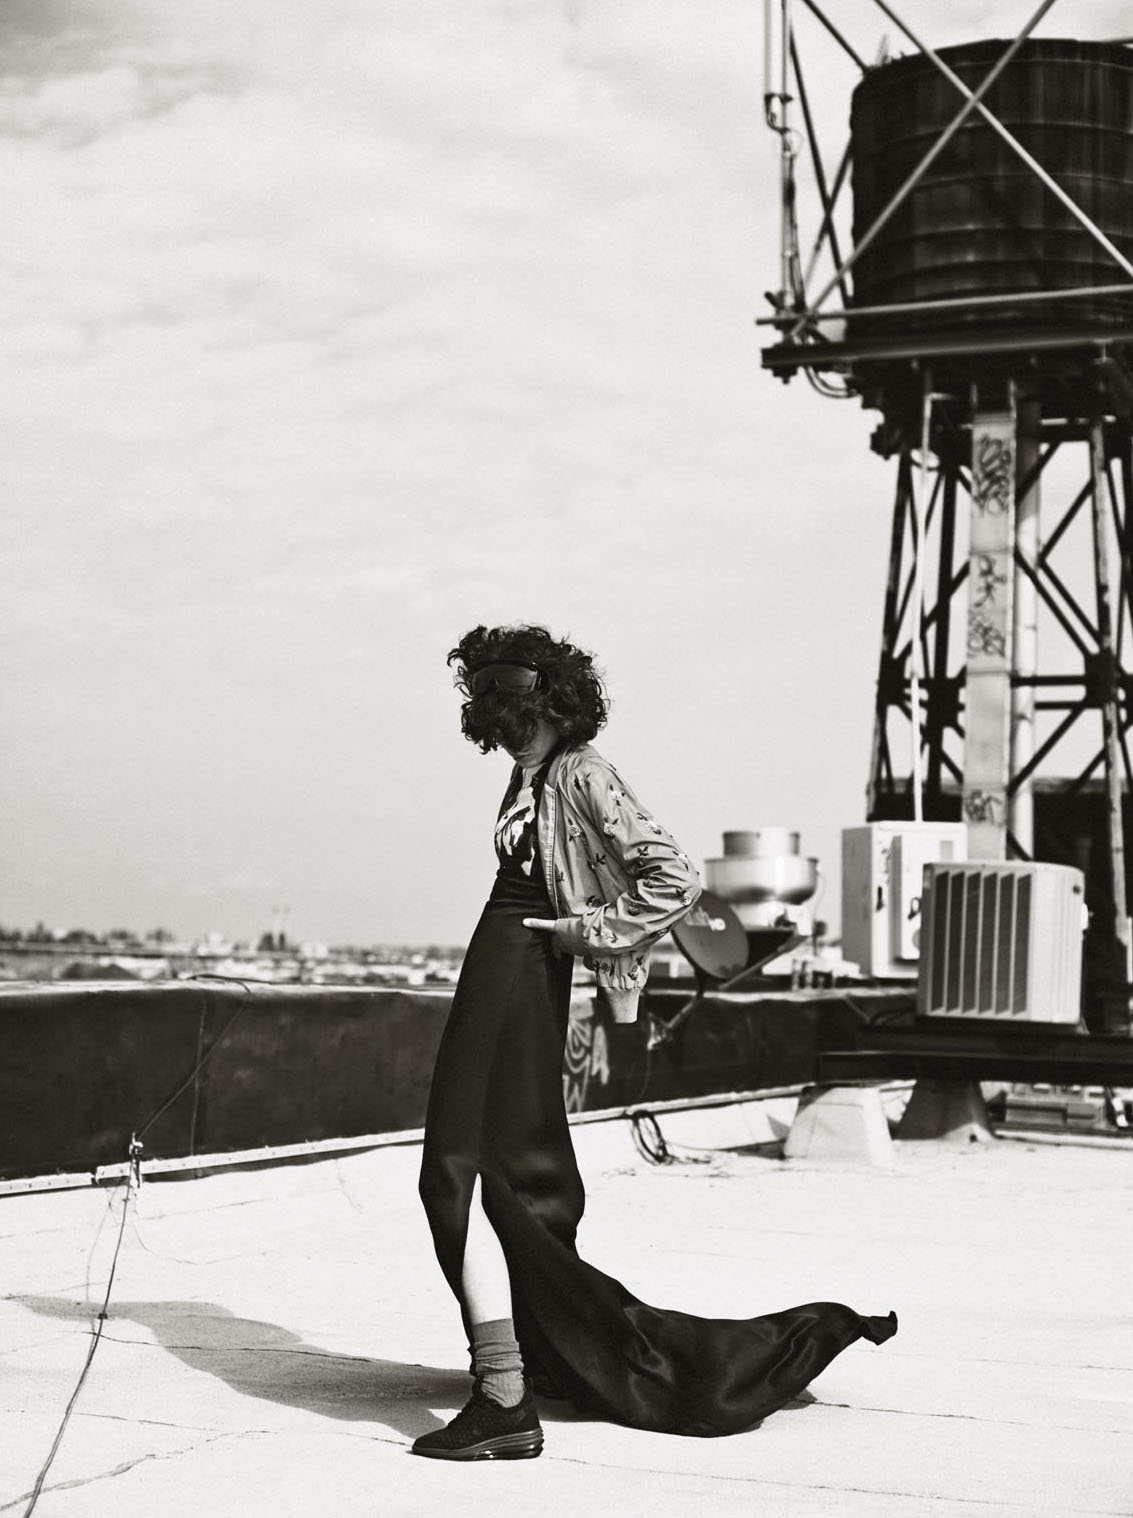 GRAY 1.11 WINTER 2014 “Ready-to-Wear” | Alessandro Simonetti | Grey Magazine | Valentina Ilardi Martin | Numerique Retouch Photo Retouching Studio